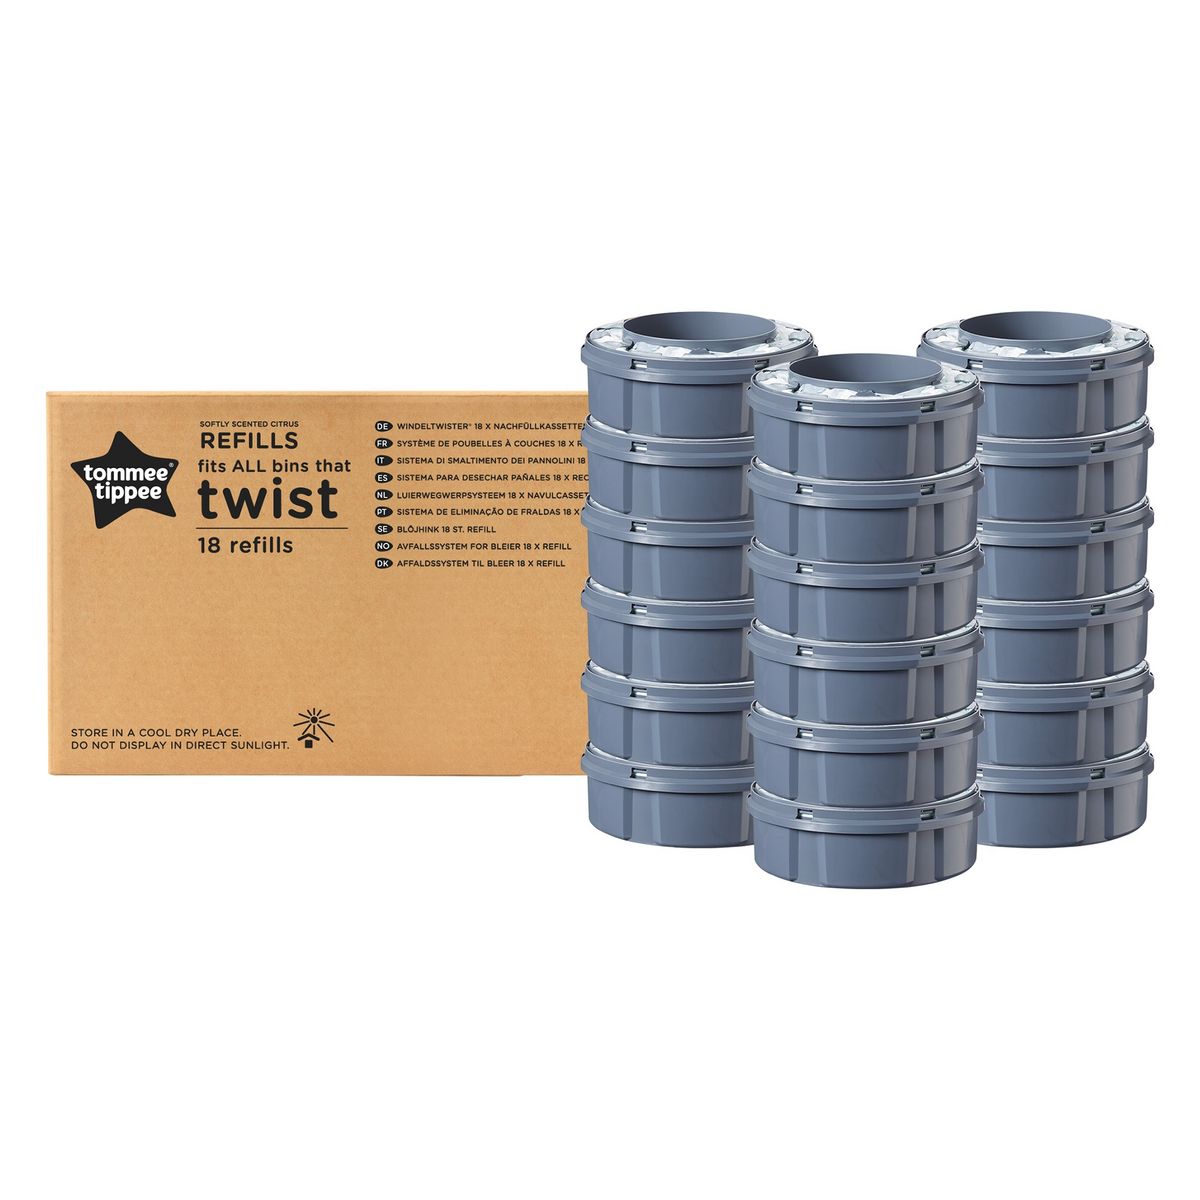 TOMMEE TIPPEE Recharges poubelle à couches Twist & click x18 pas cher 